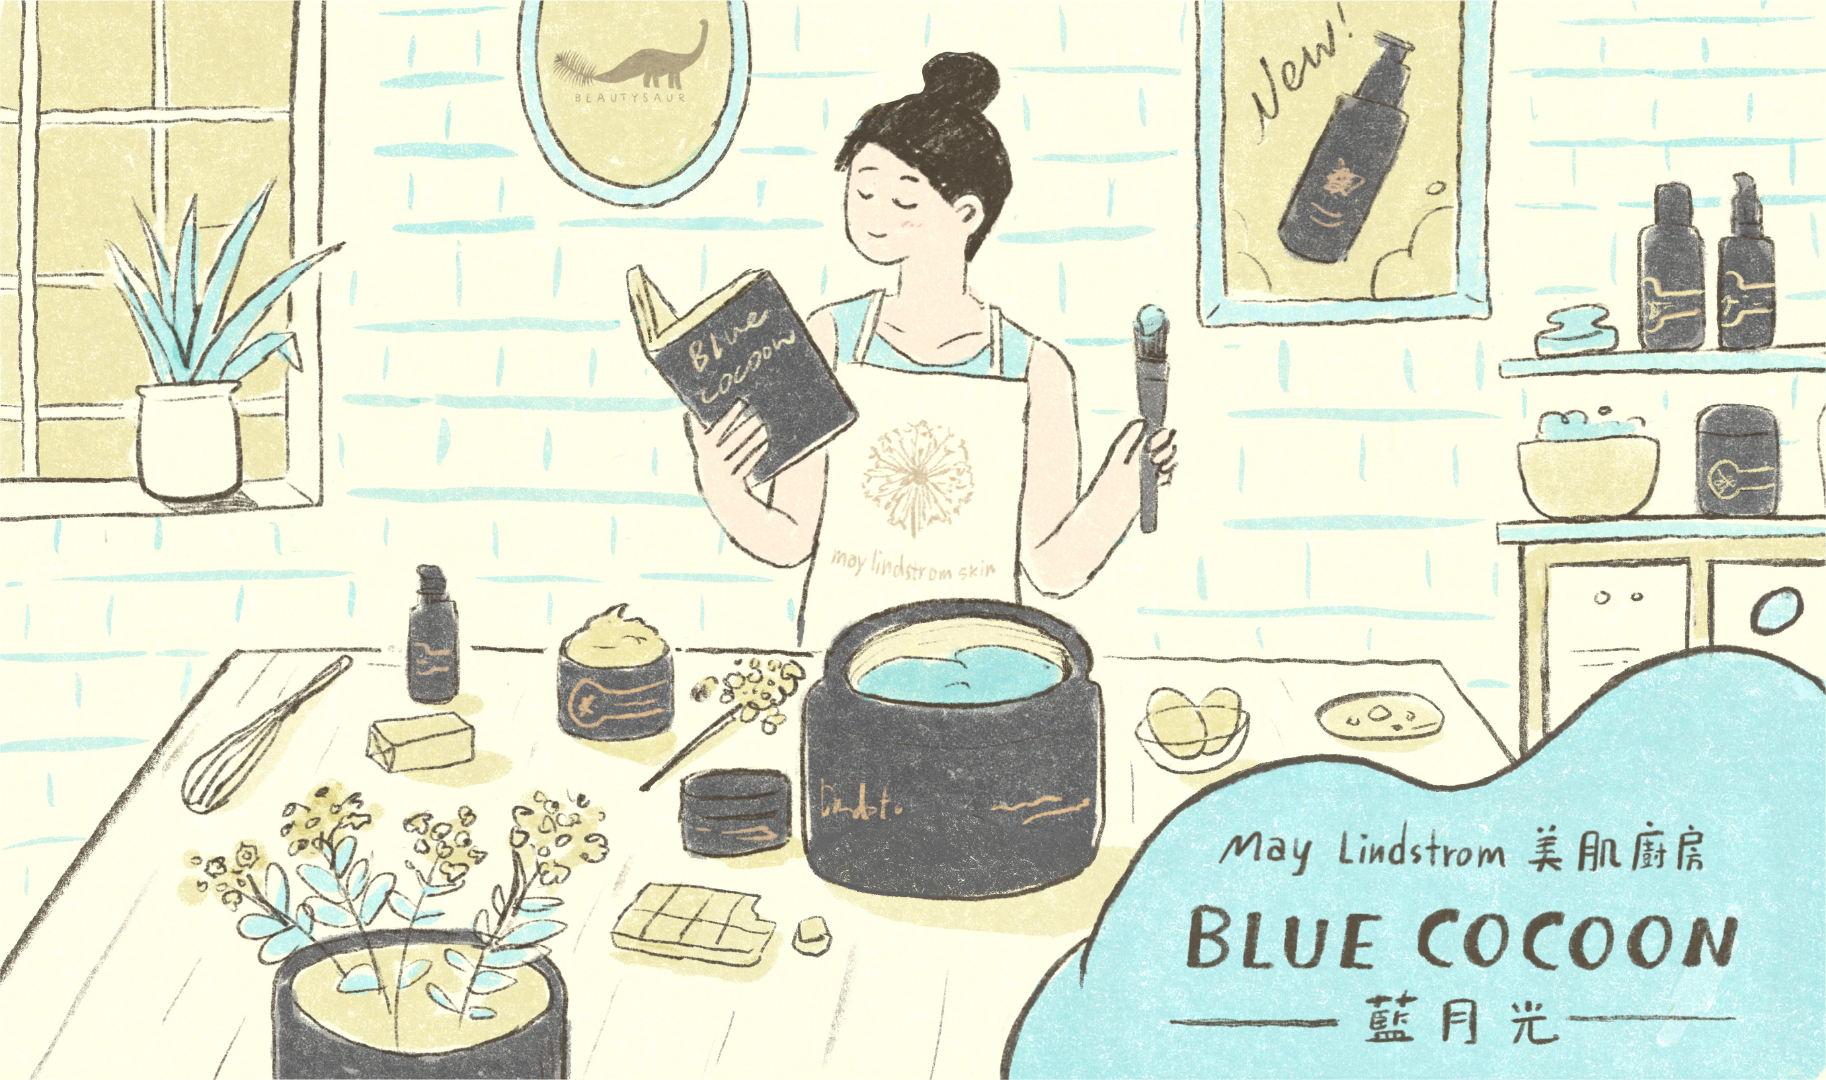 【May Lindstrom美肌廚房】永遠的大婆Blue Cocoon藍月光